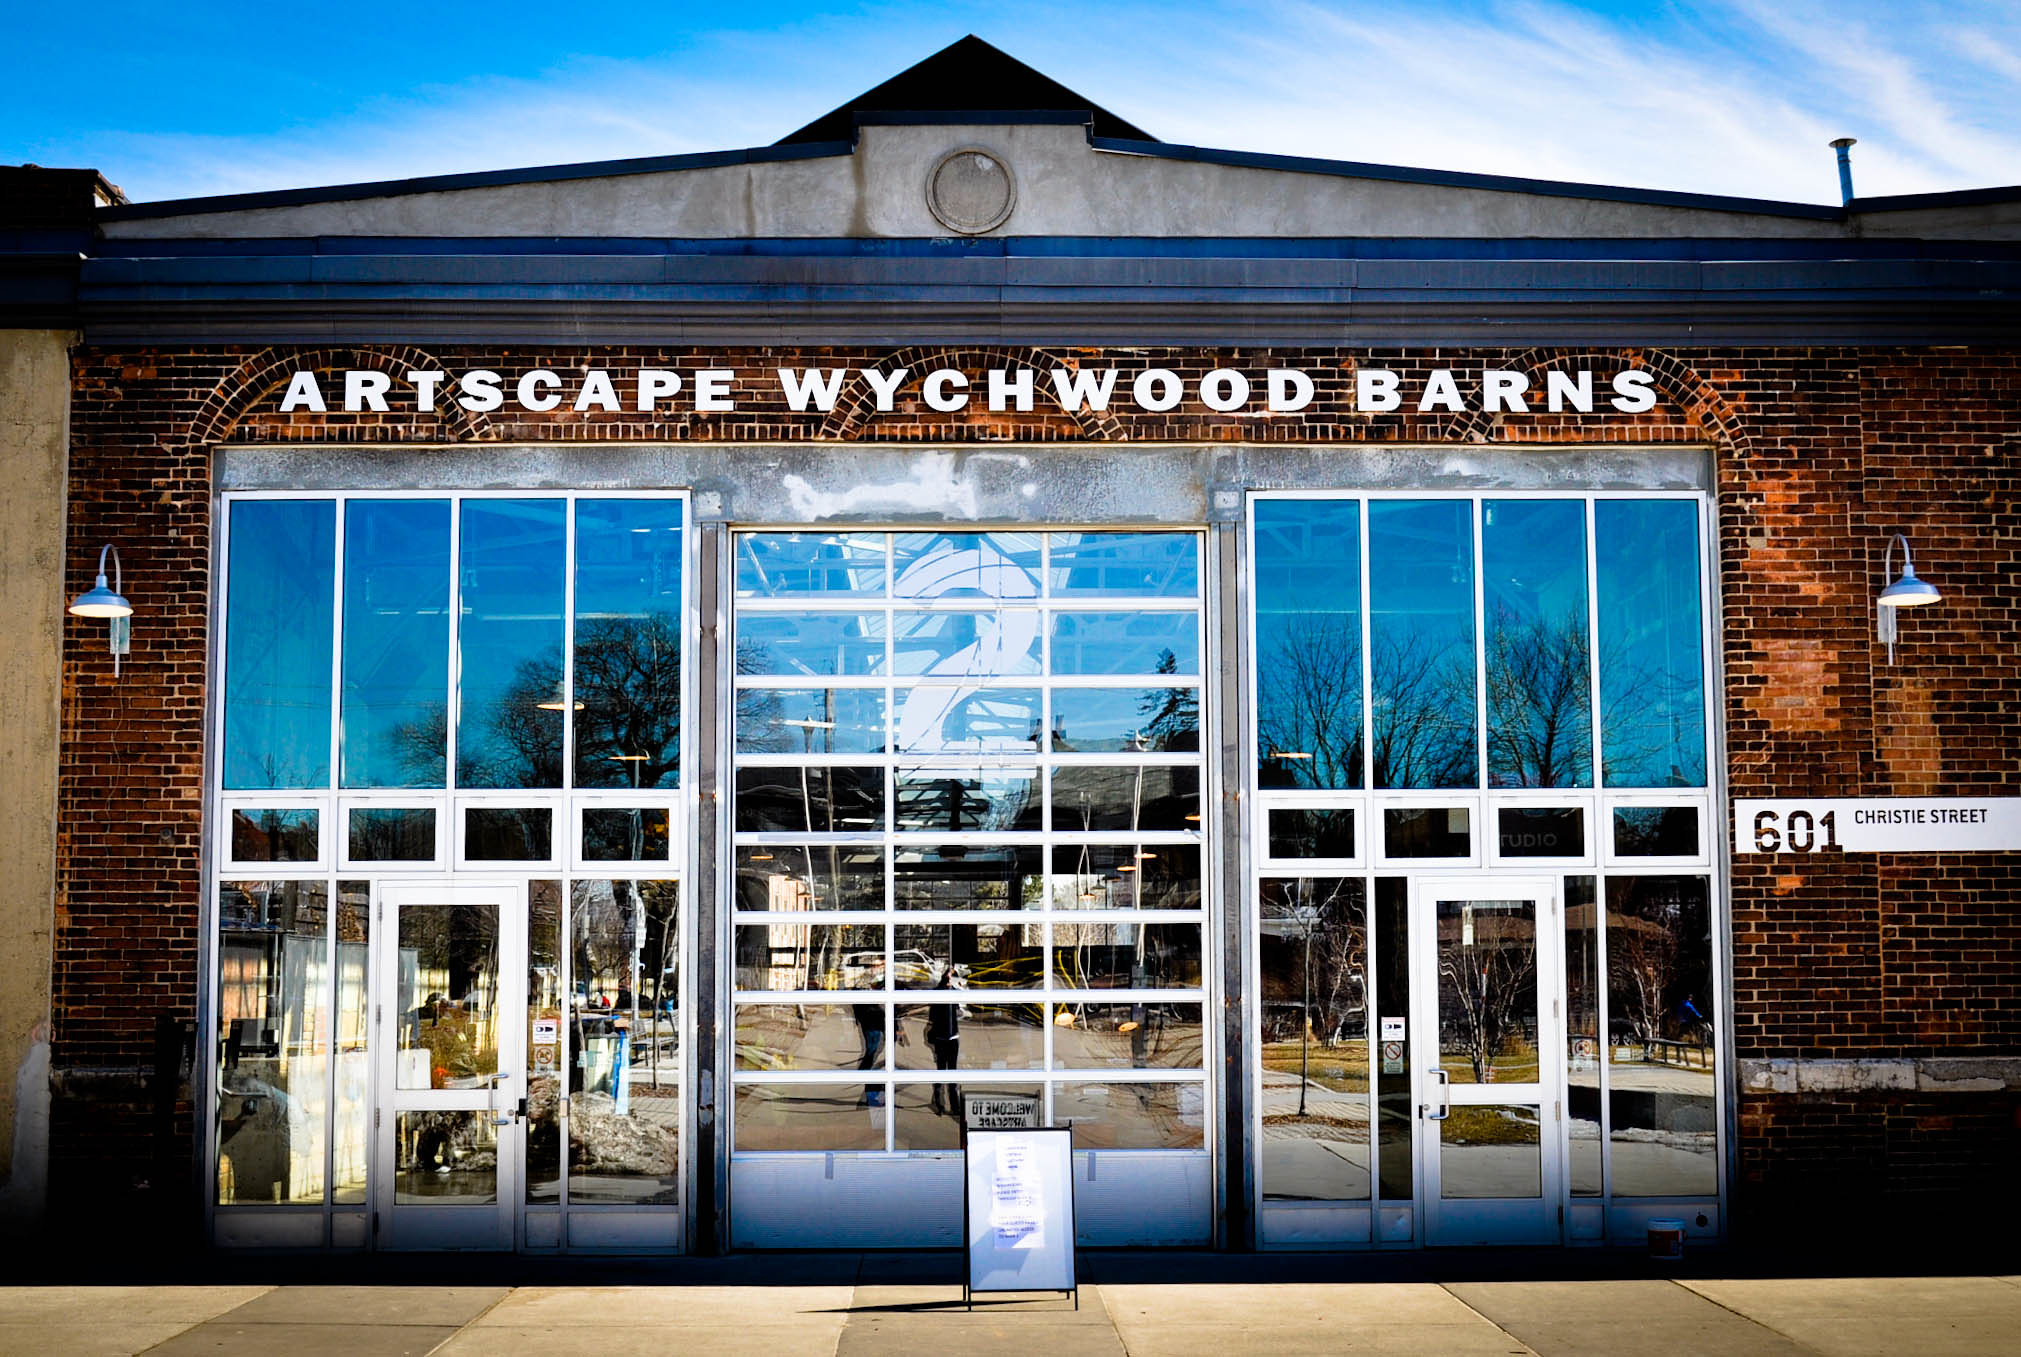 Artscape Wychwood Barns front facade